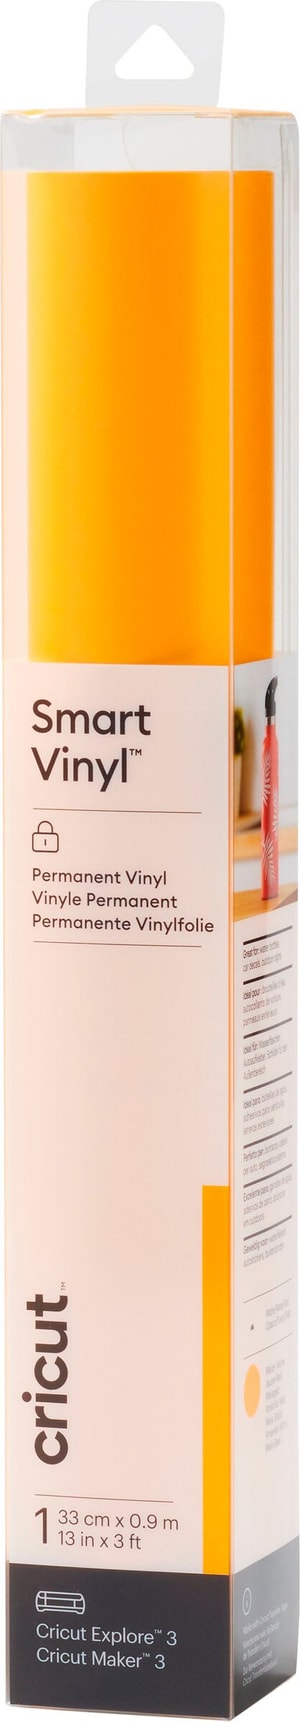 Film de vinyle Smart Matt Permanent 33 x 91 cm, Jaune